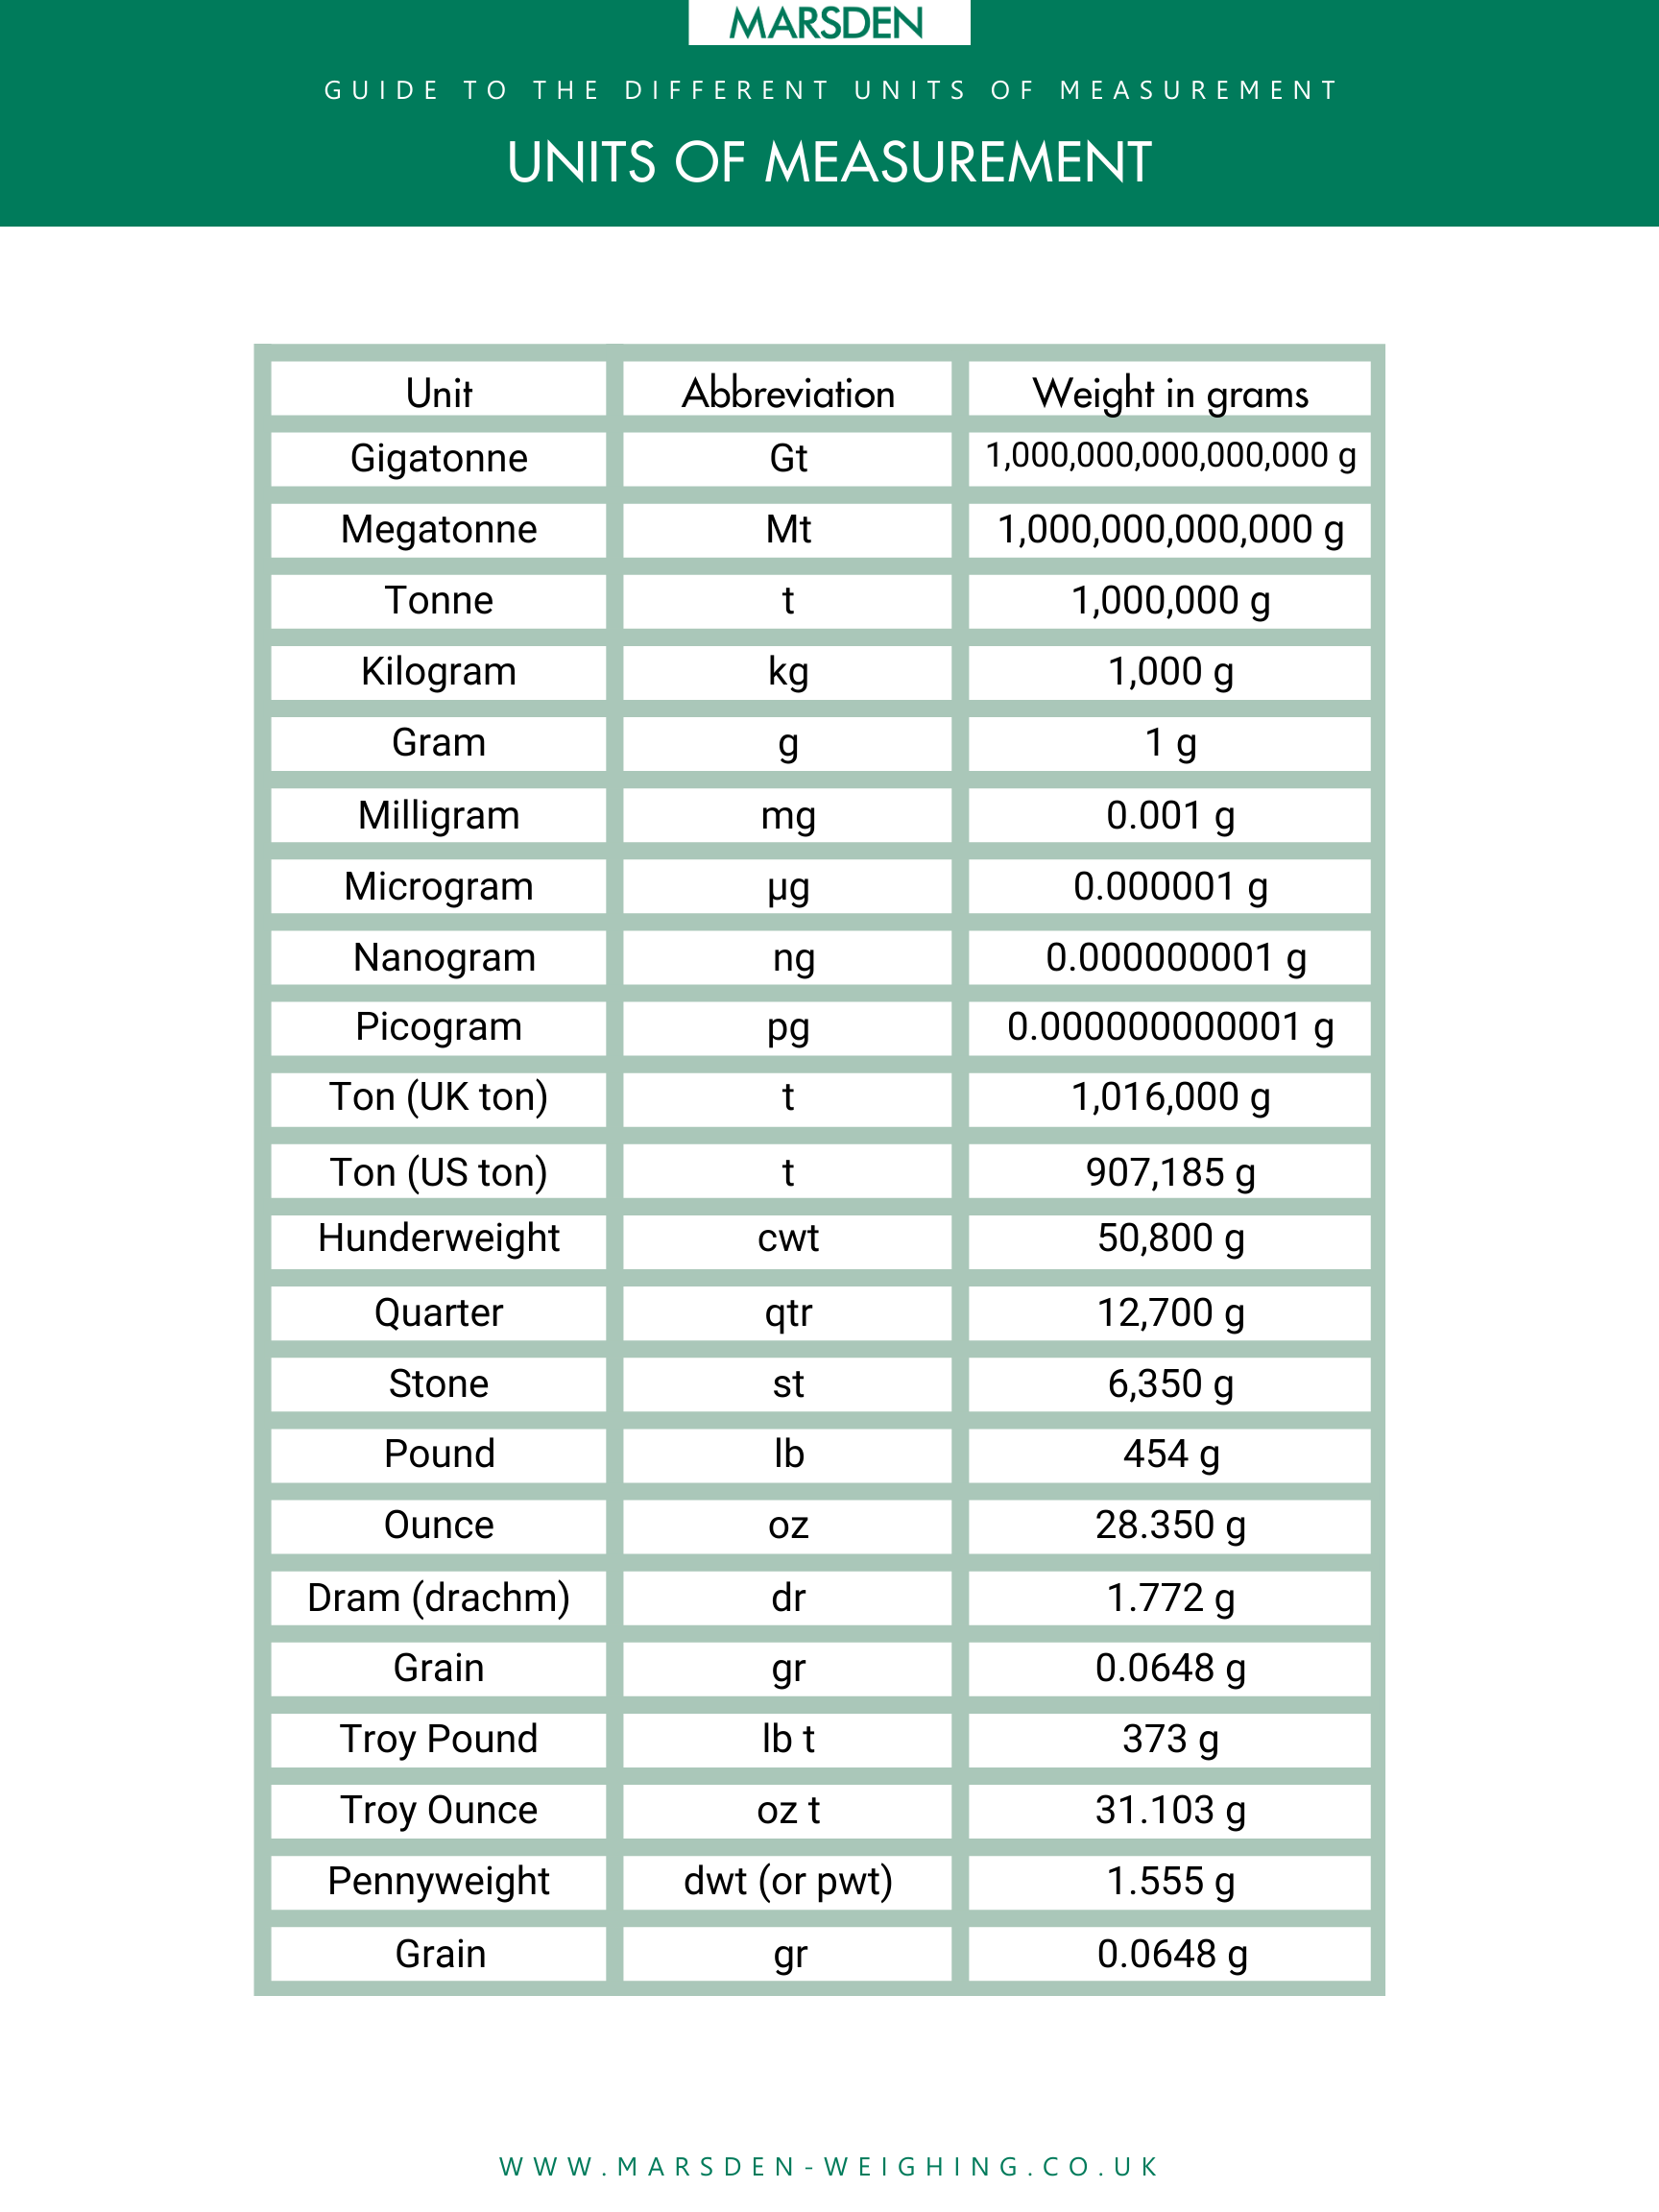 Common units of measurement guide